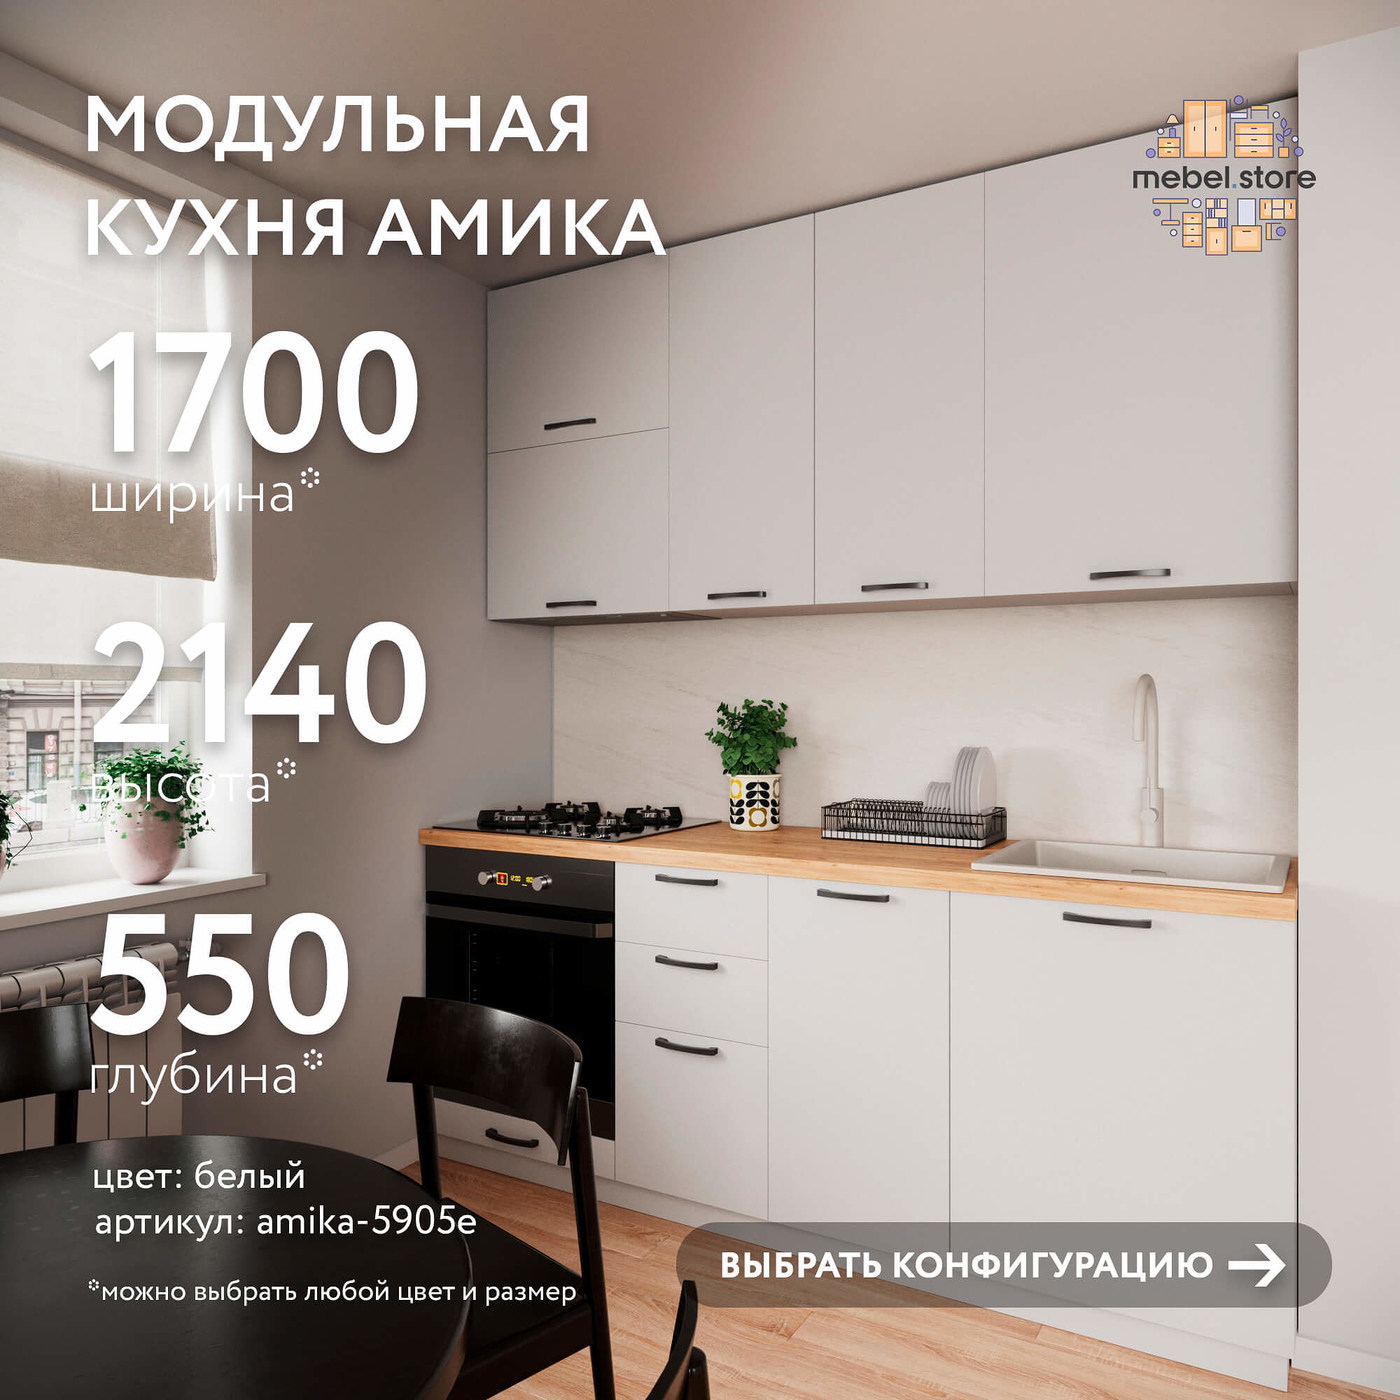 Модульная кухня Амика-5905e минимализм гарнитур - фото 1 large